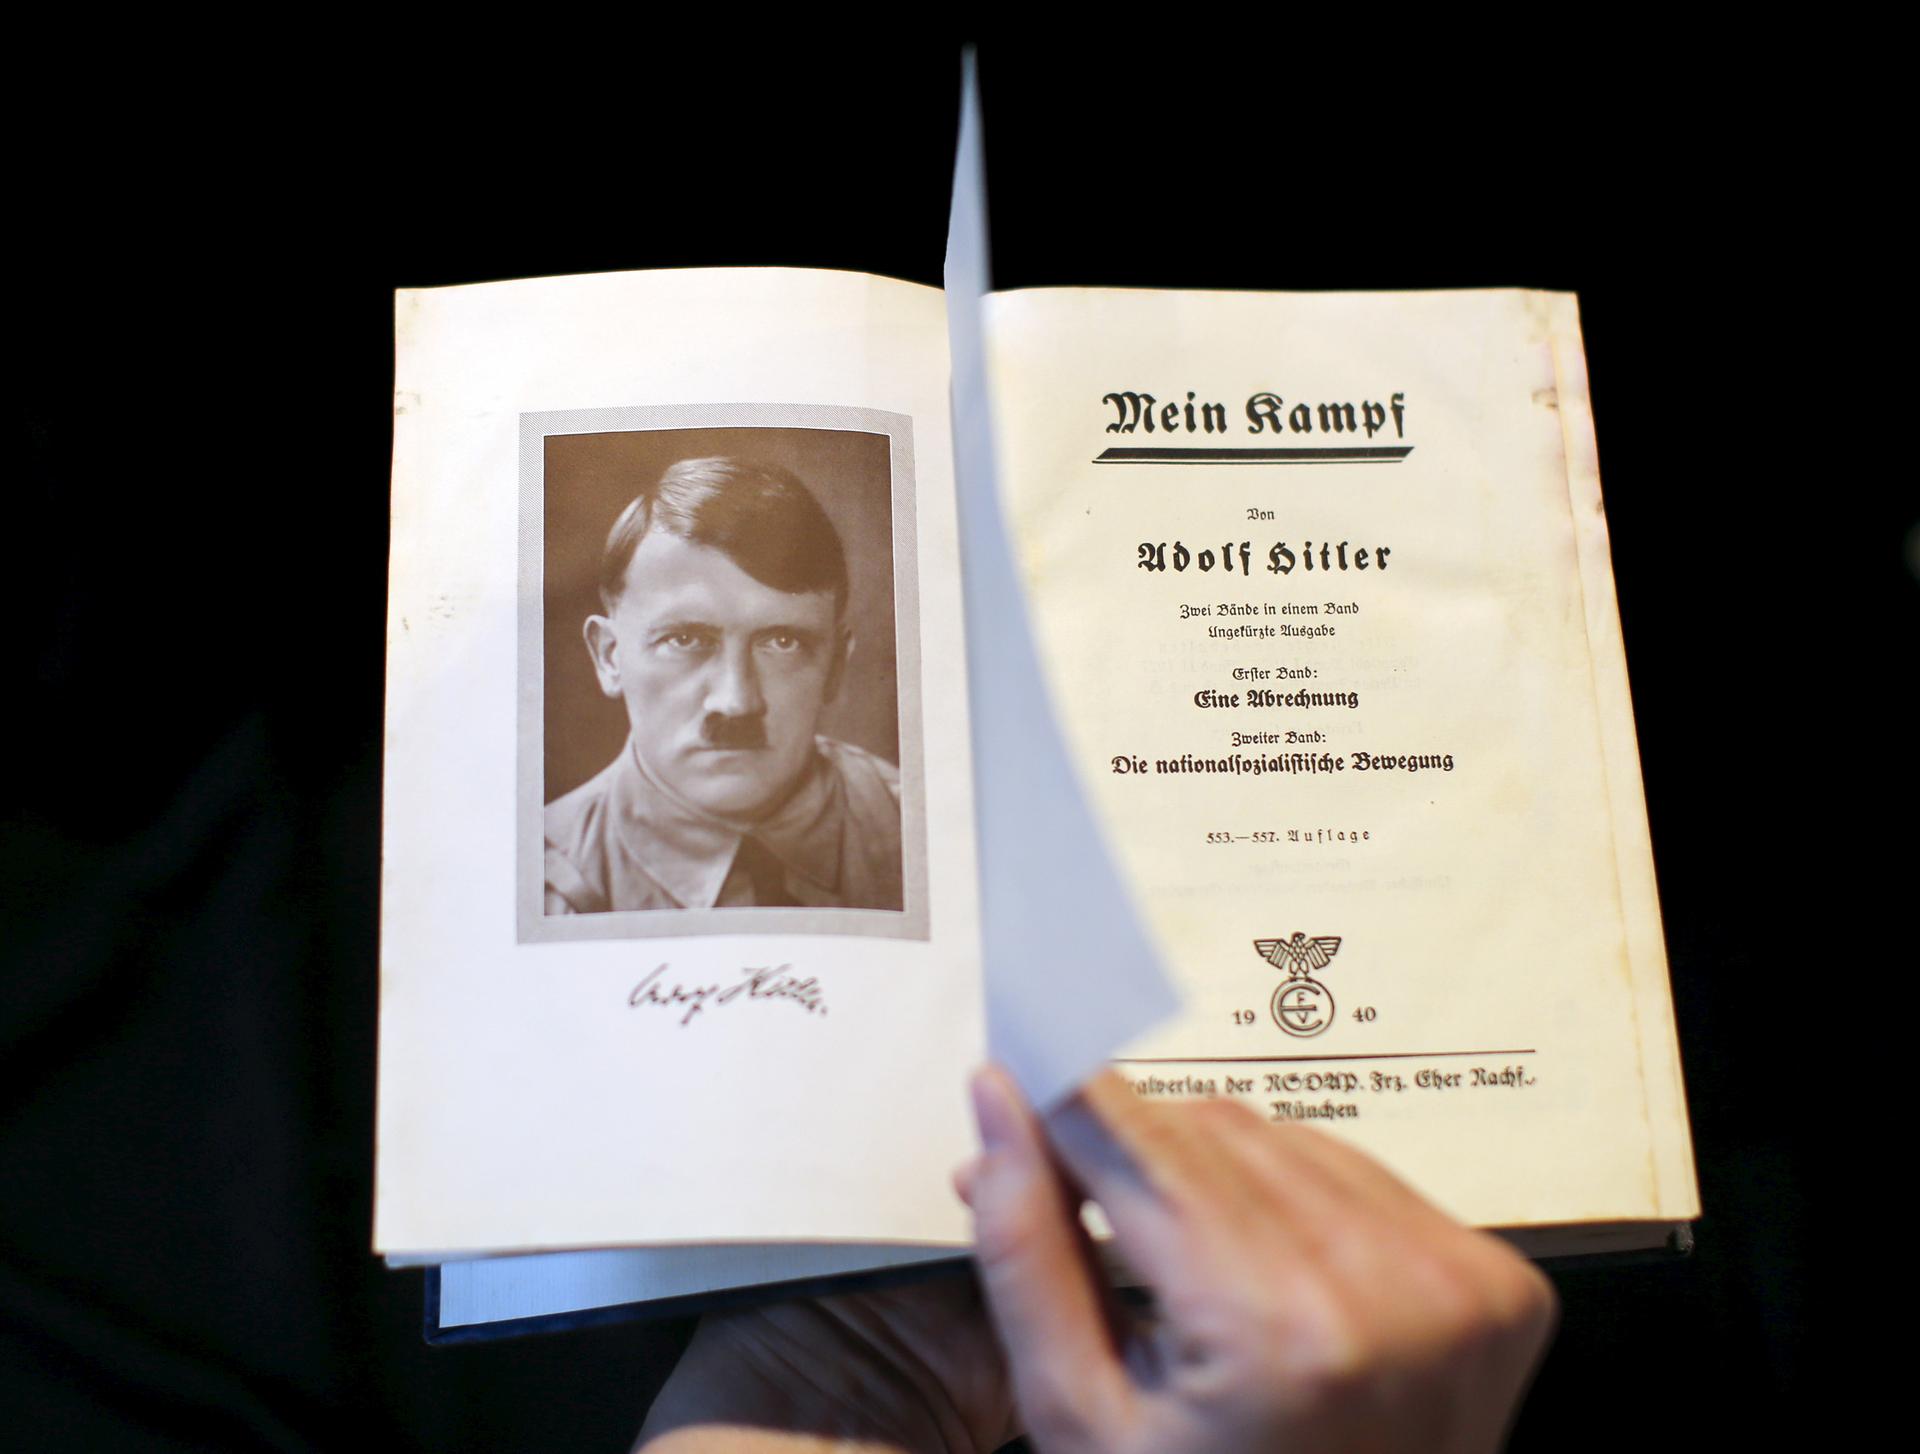 Adolf Hitler's book Mein Kampf